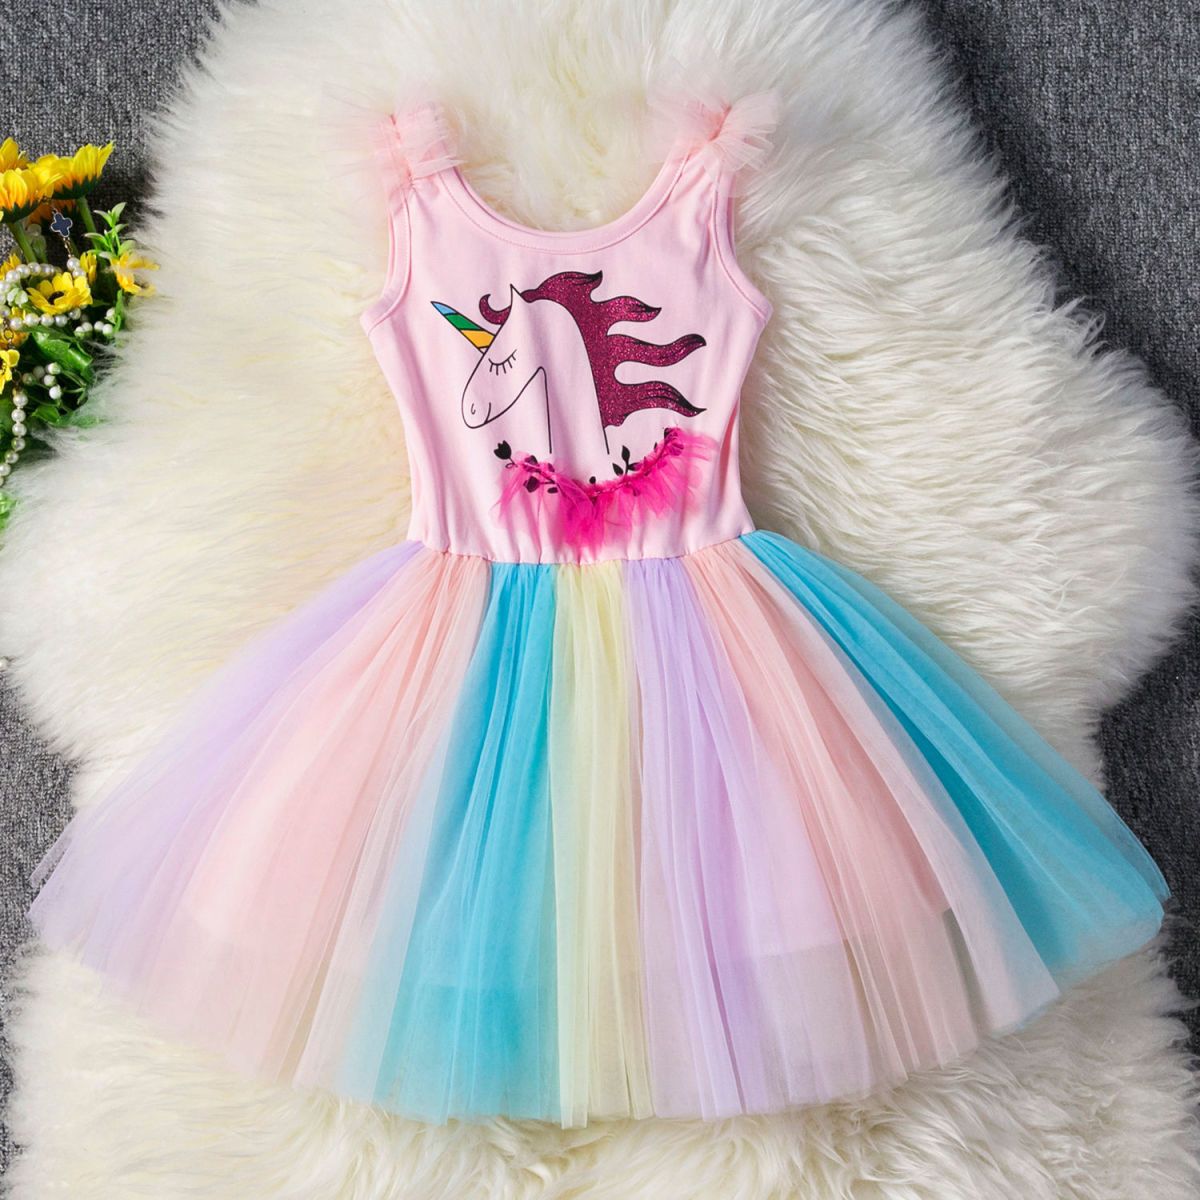 2022 Summer Girls Cotton Lace Princess Dress Kids Korean Style Unicorn Cherry Dress Colorful Skirt